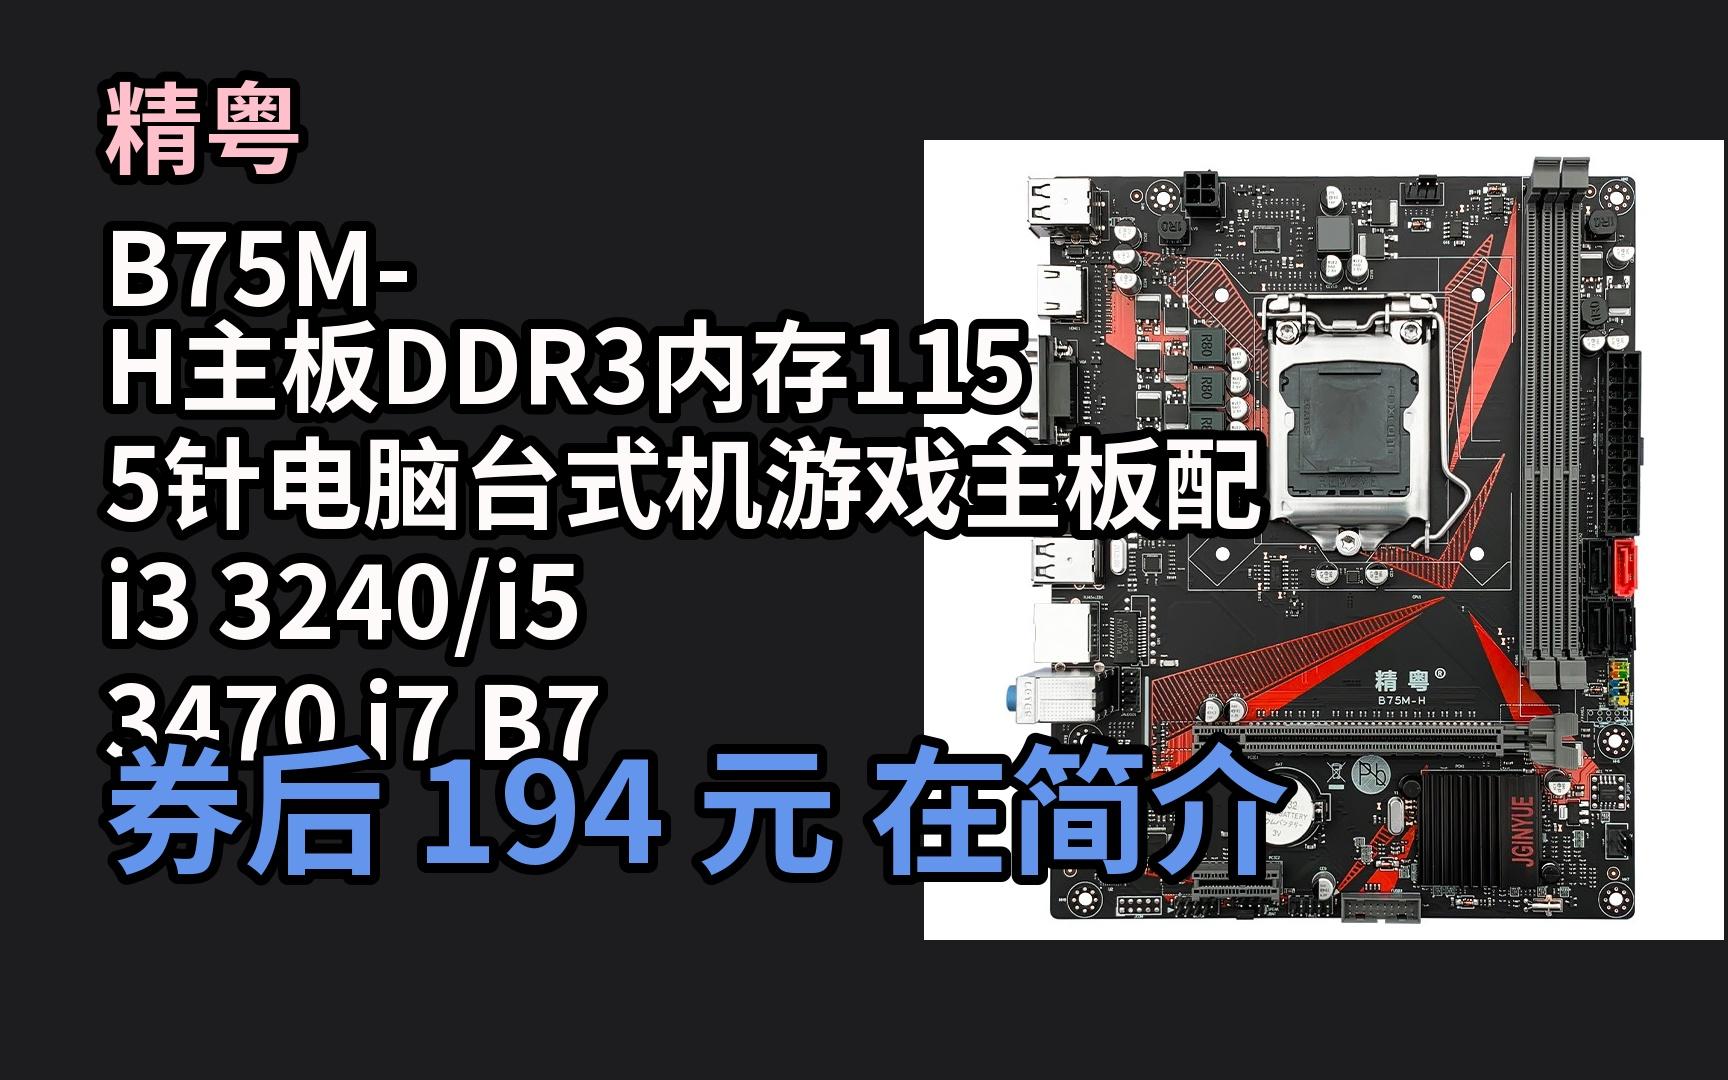 B310 是否适用 DDR3？一文详解内存兼容性问题  第3张